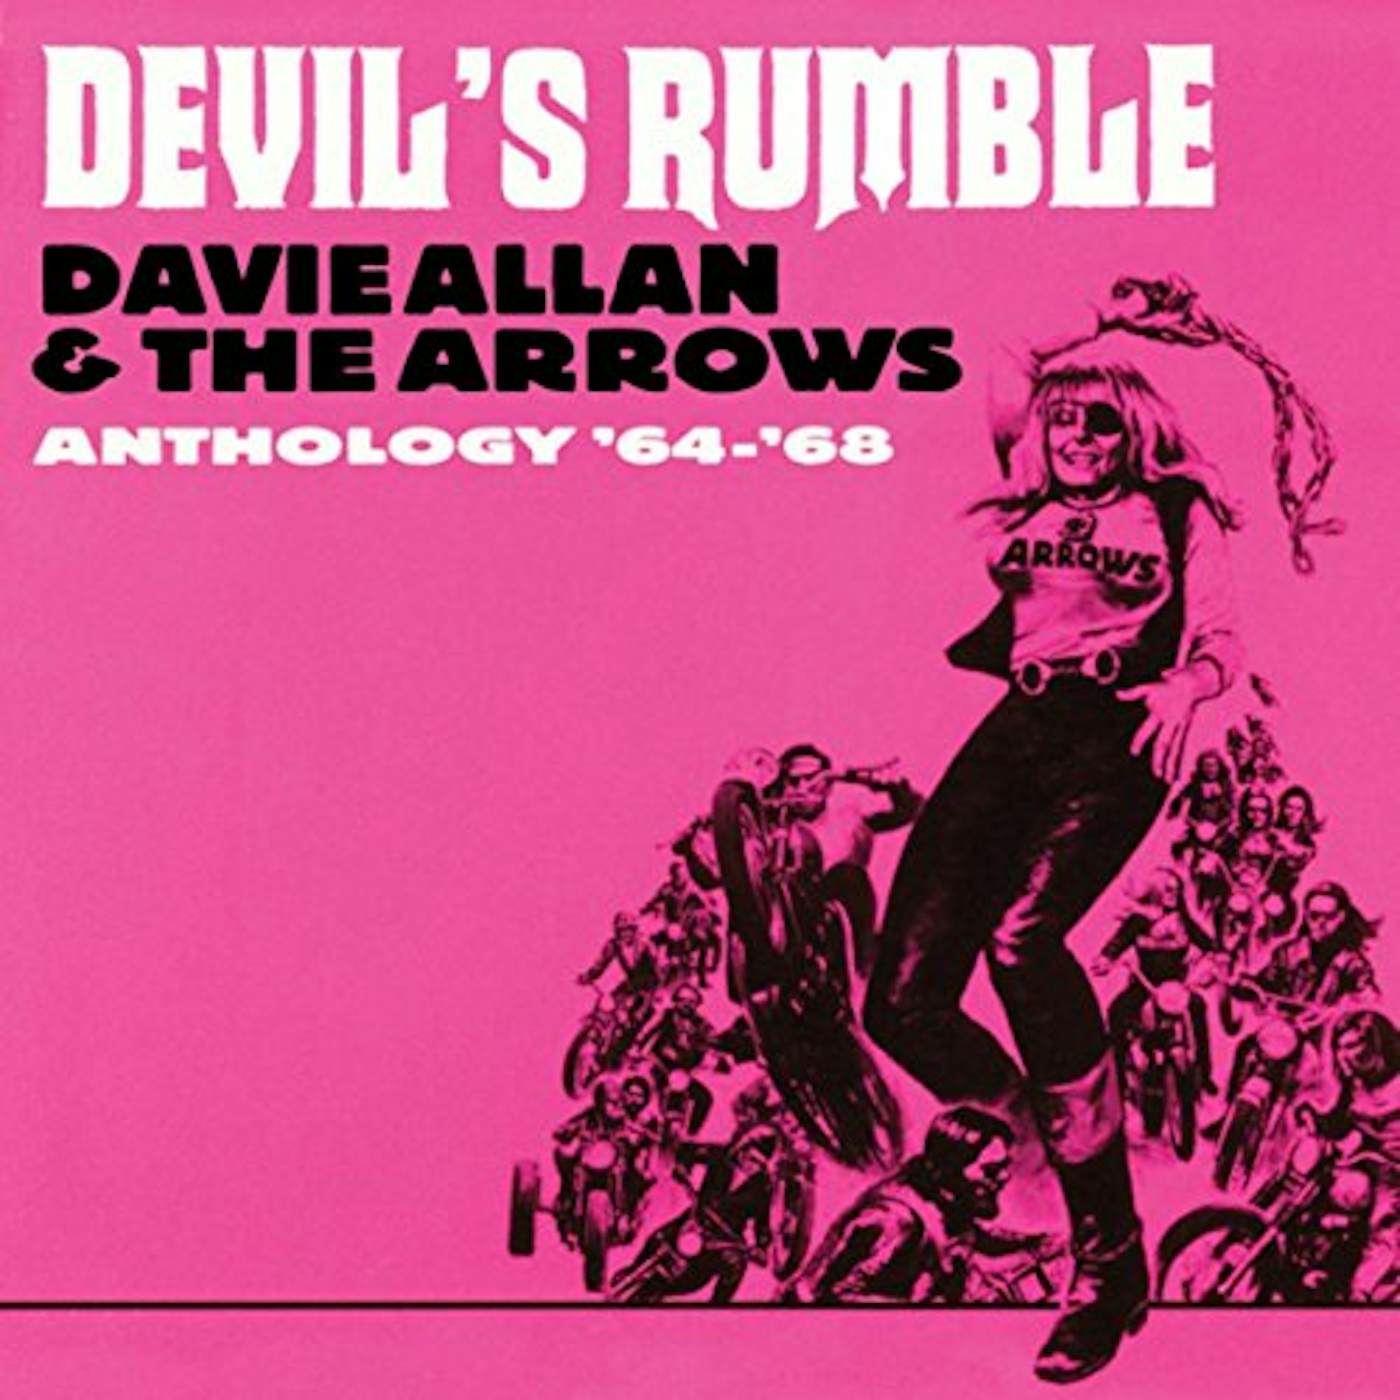 Davie Allan & The Arrows DEVIL'S RUMBLE: ANTHOLOGY 64-68 CD